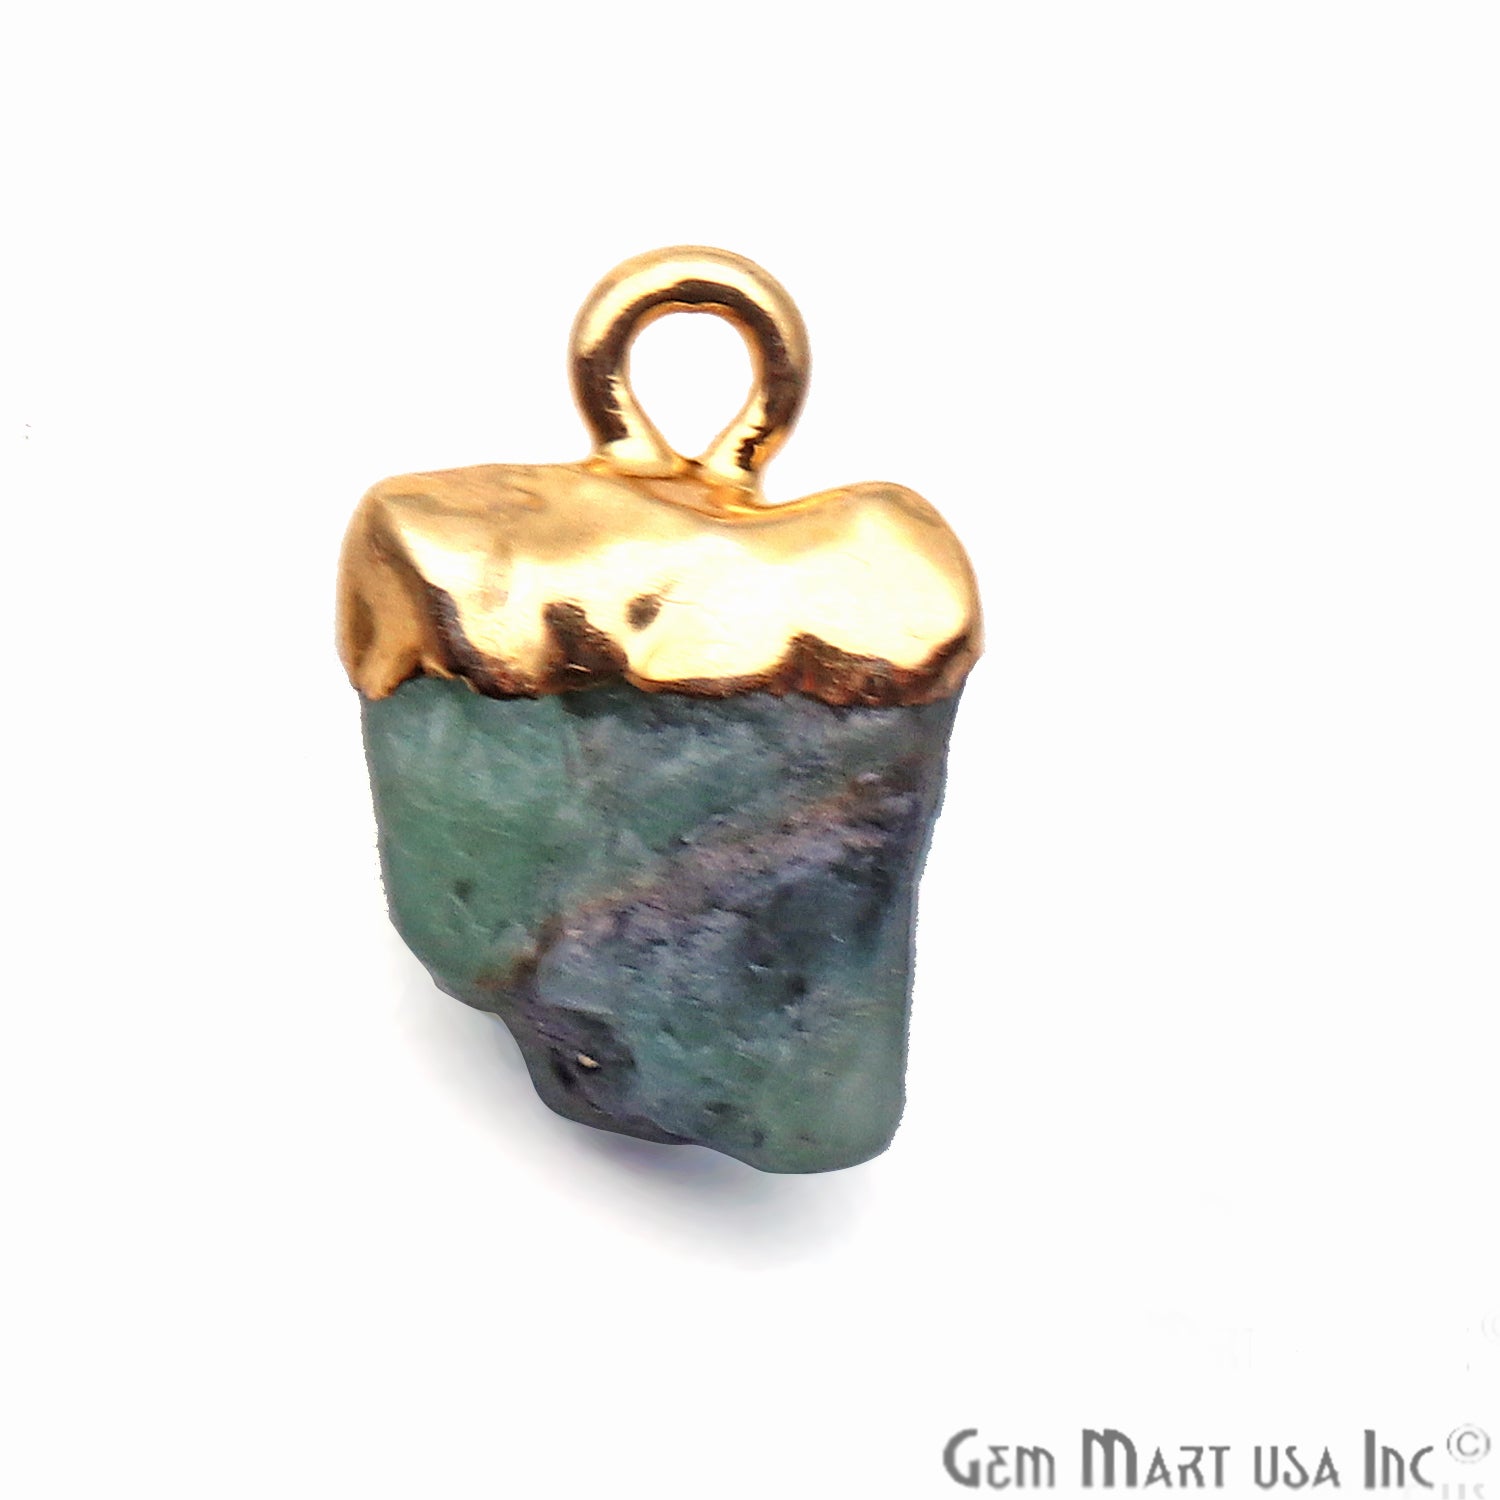 Rough Emerald Gemstone 11x6mm Gold Edged Bracelets Charm Connectors - GemMartUSA